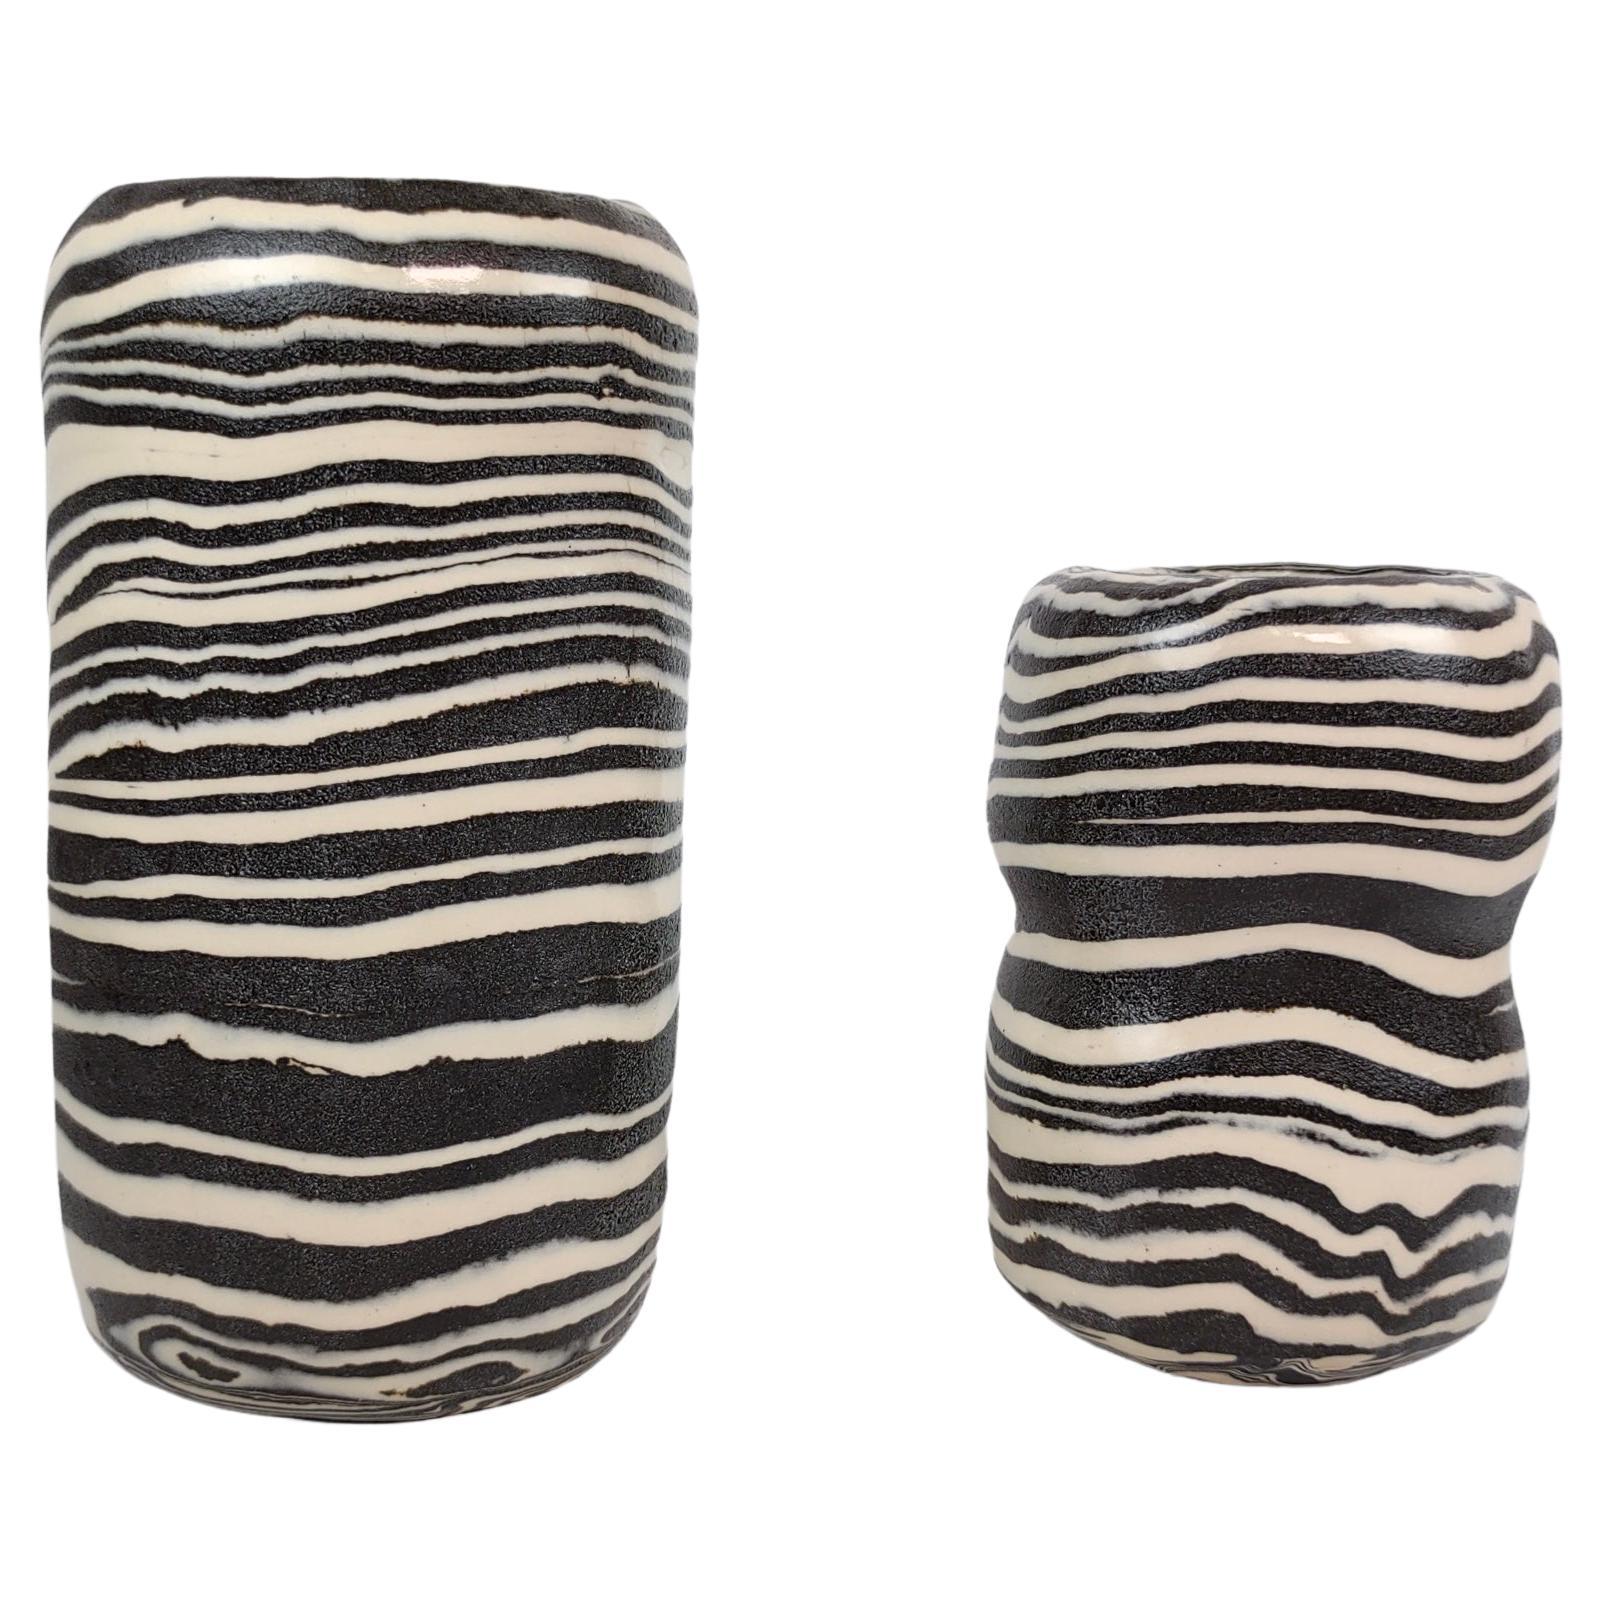 Handmade Set of Nerikomi 'Zebra' Striped Black and White Vases by Fizzy Ceramics